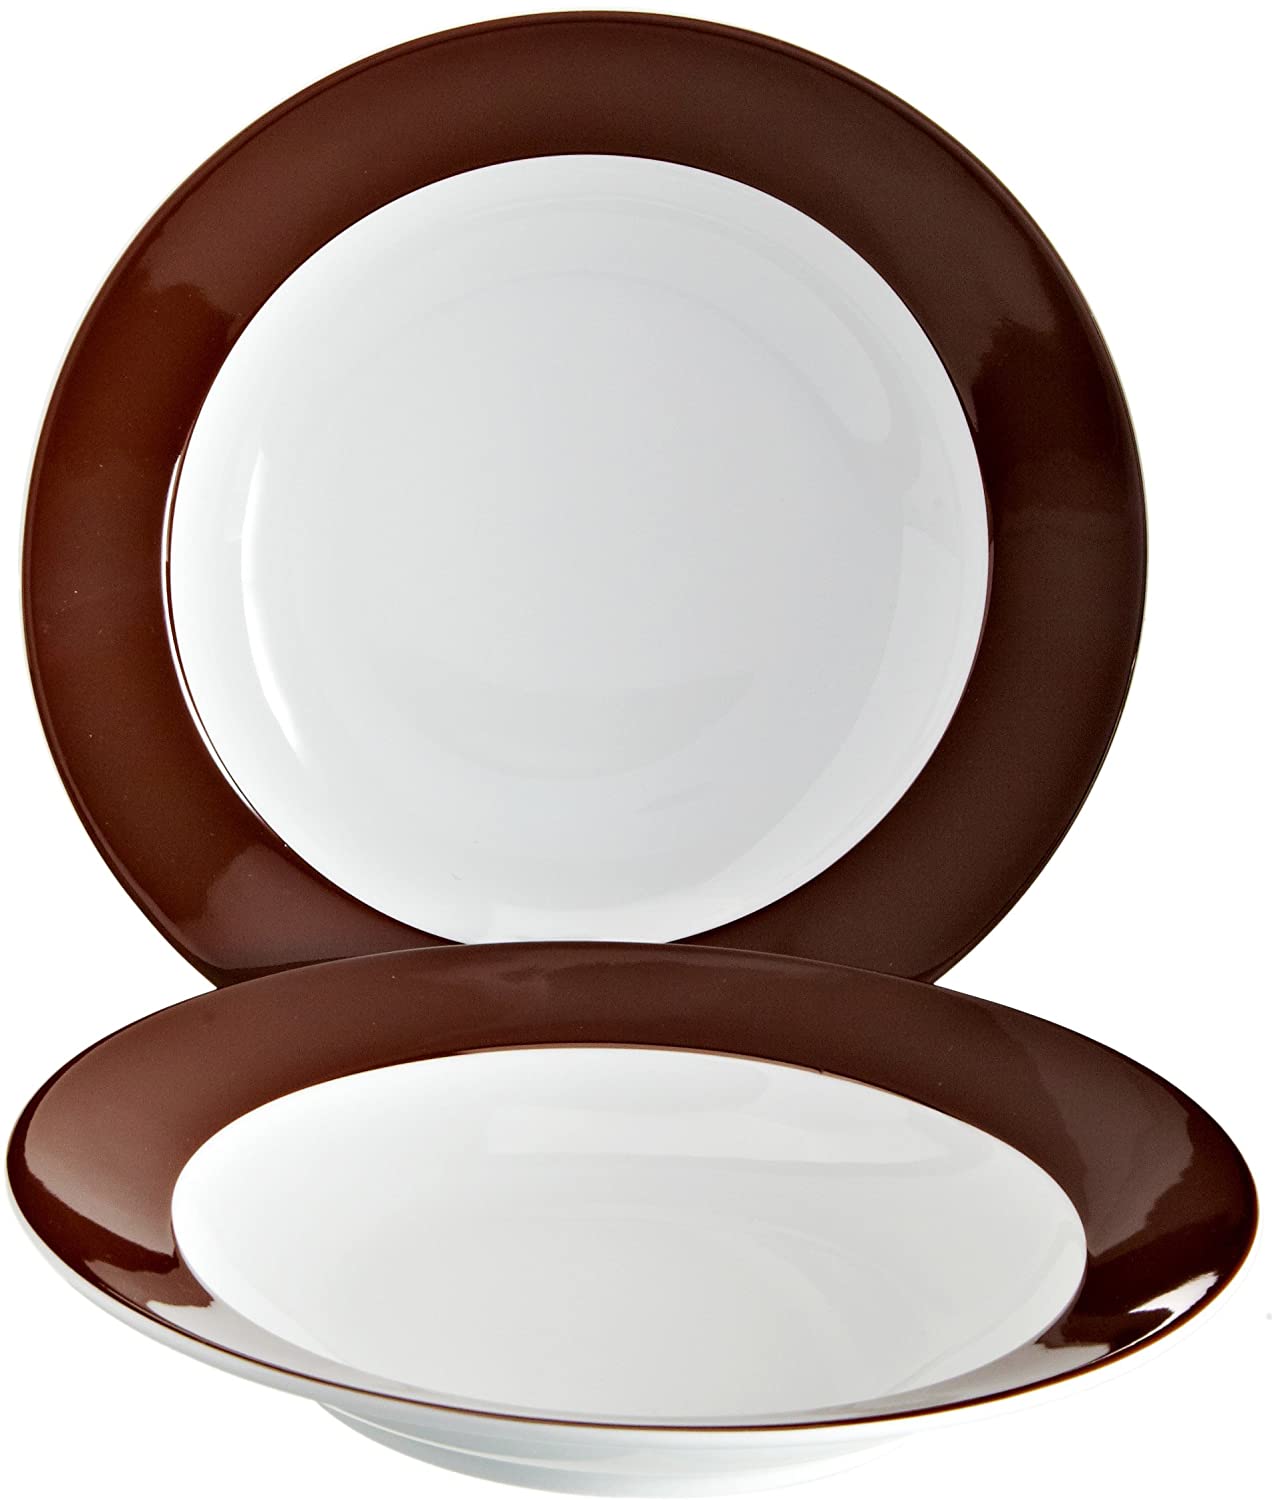 Kahla 57E149A72605C Soup Plates / Set Of 2 / Chocolate Brown